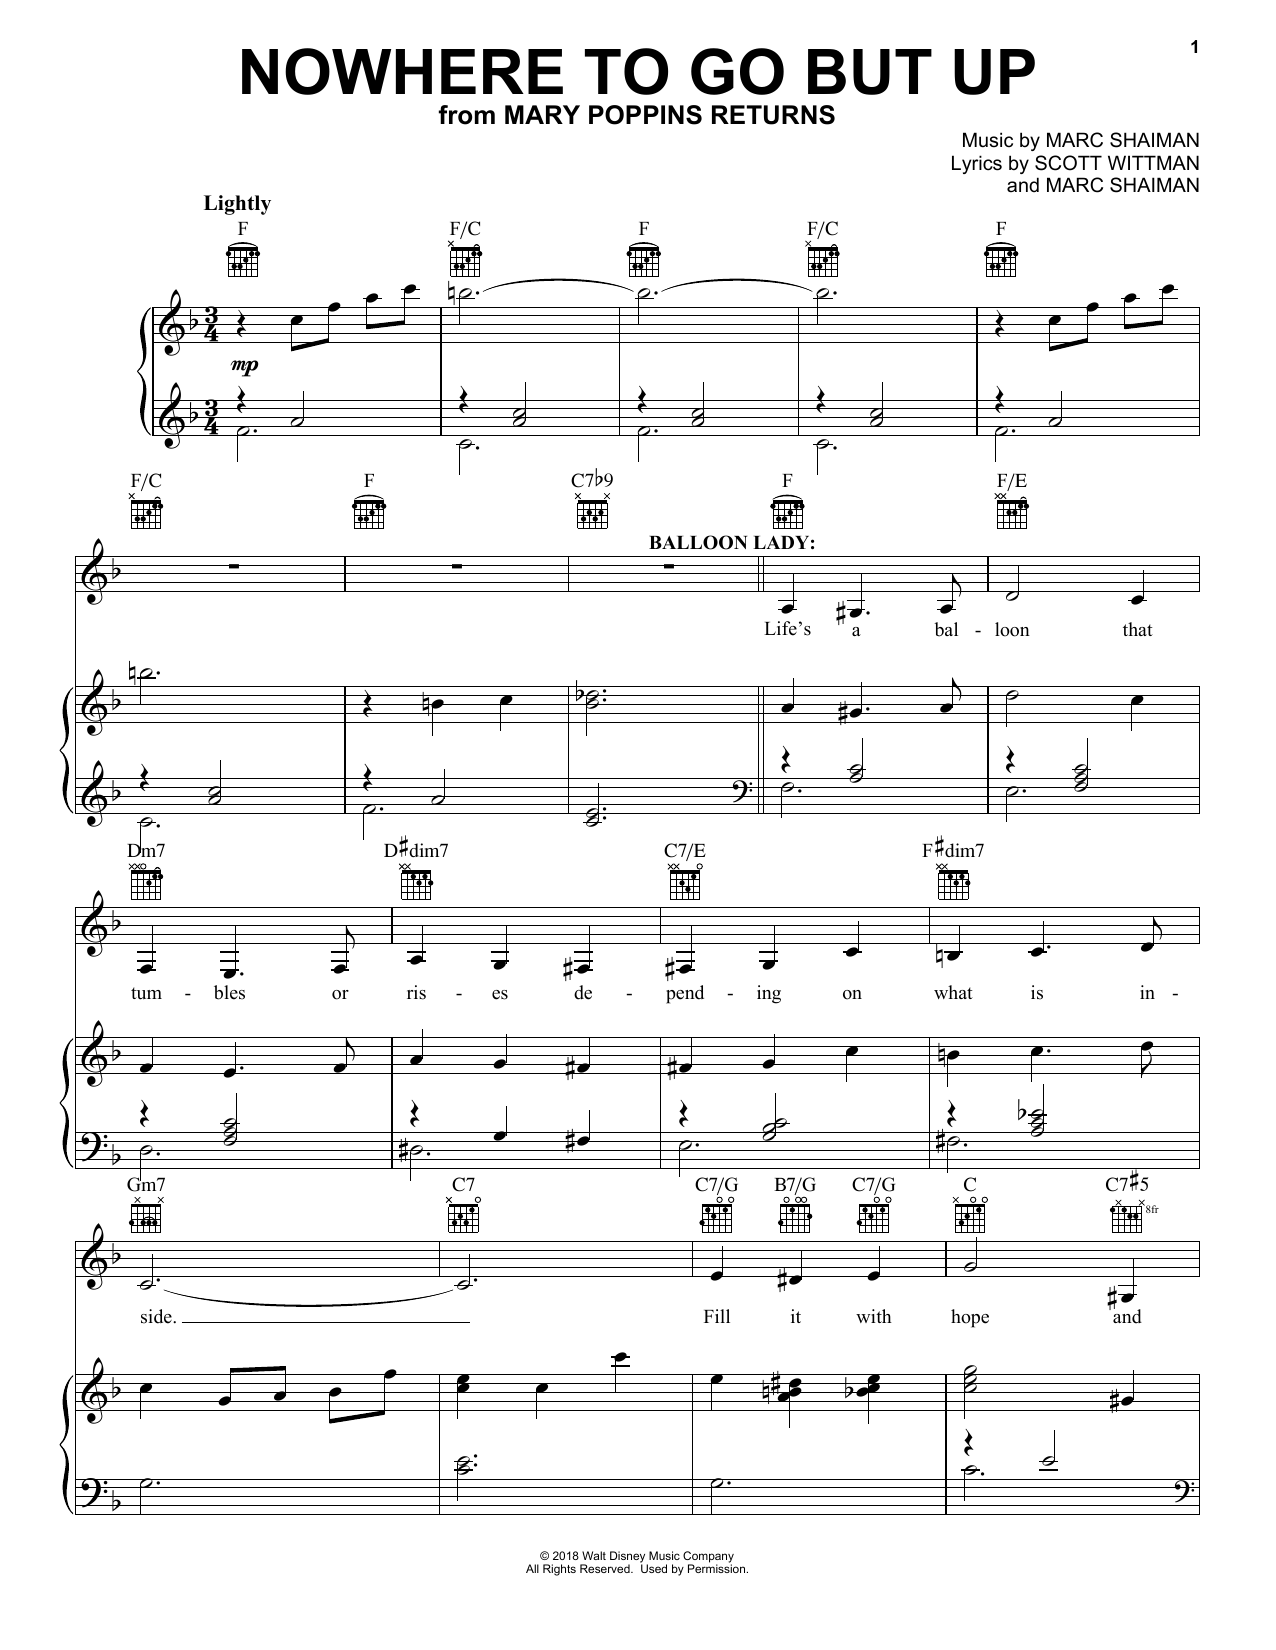 Angela Lansbury Company Nowhere To Go But Up From Mary Poppins Returns Sheet Music Pdf Notes Chords Disney Score Ukulele Download Printable Sku 4090